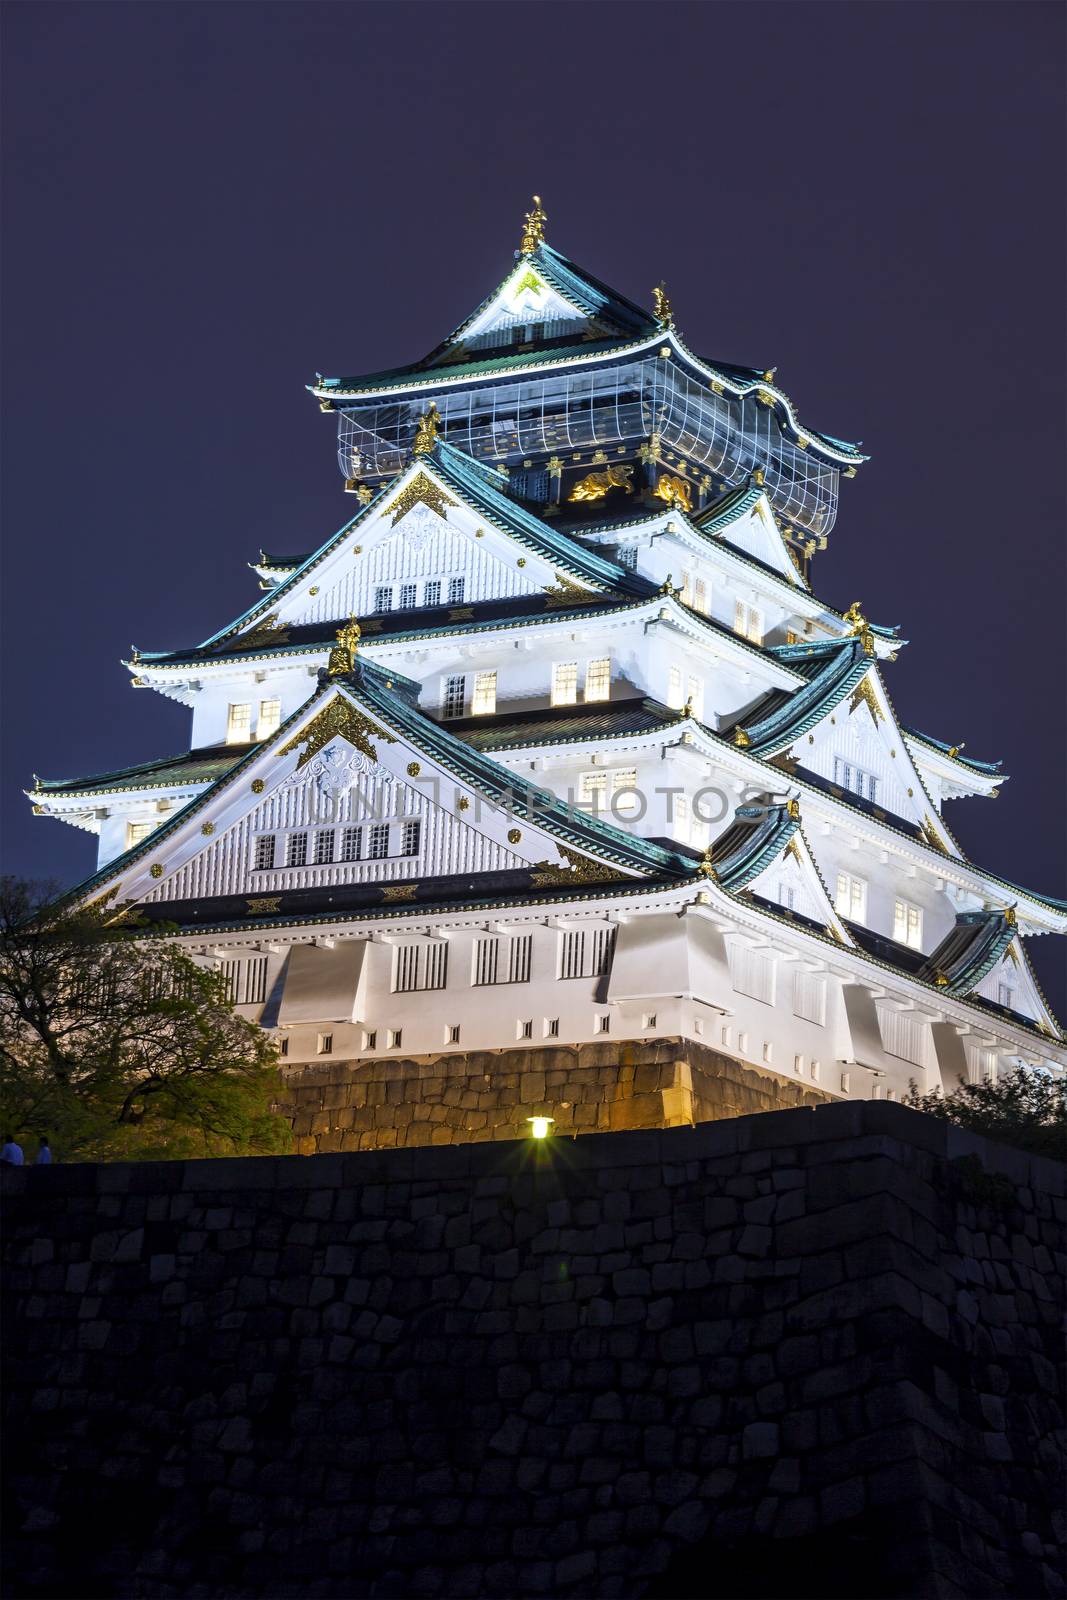 Osaka Castle at night in Japan by kawing921